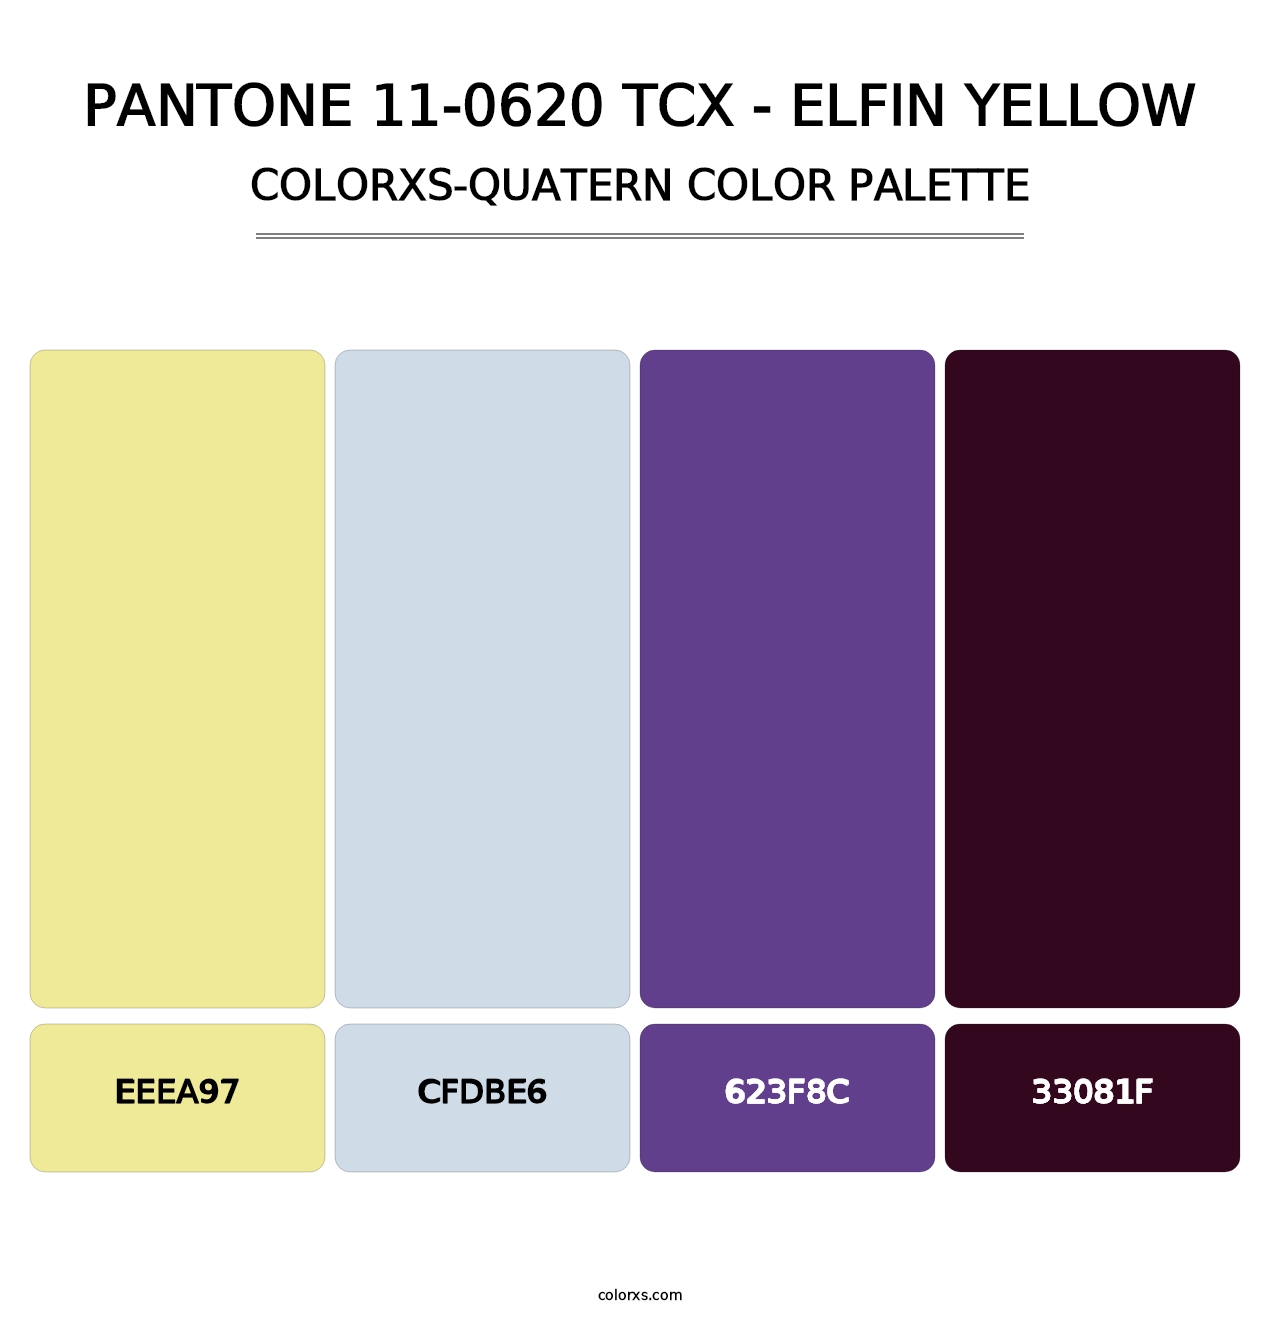 PANTONE 11-0620 TCX - Elfin Yellow - Colorxs Quatern Palette